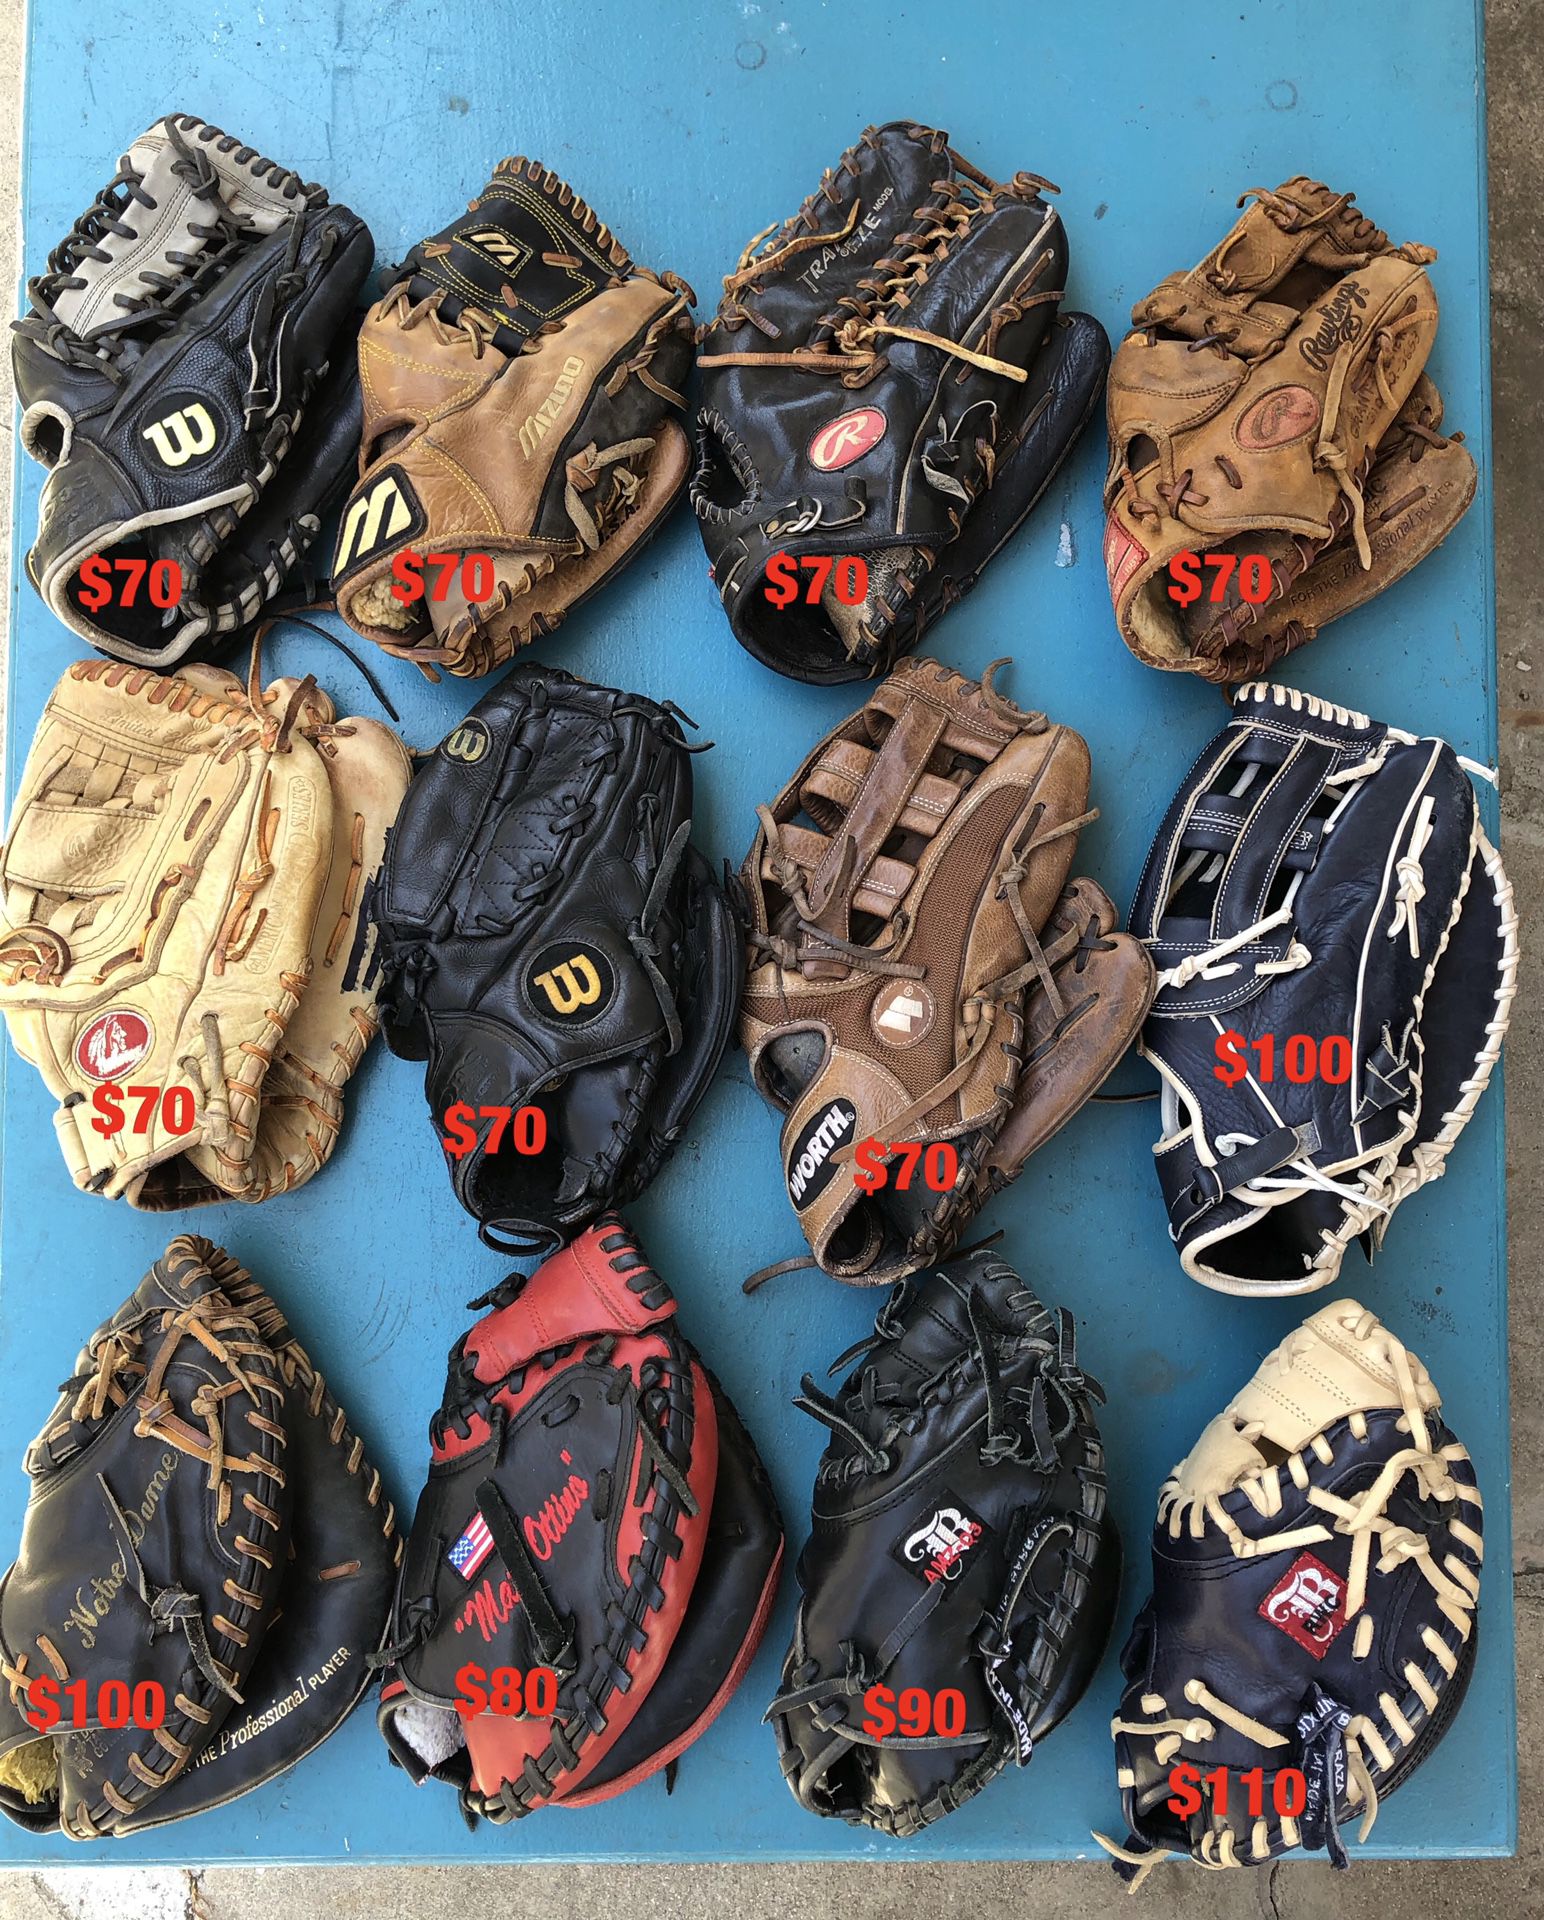 Baseball gloves equipment Rawlings easton Rolin Wilson mizuno nokona bats equipment